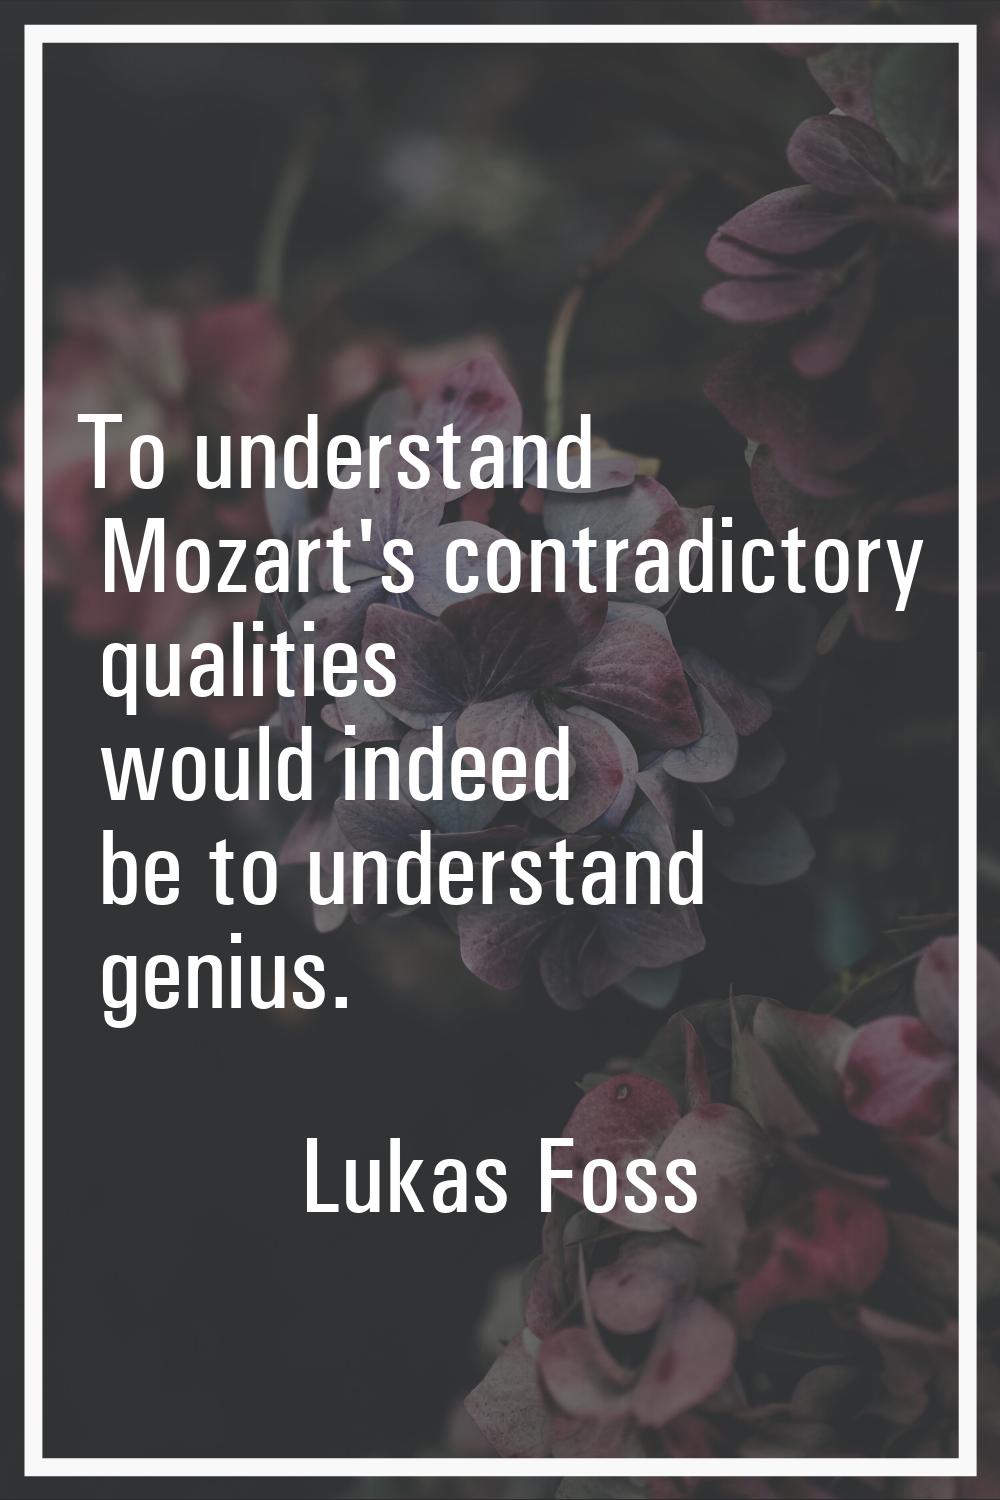 To understand Mozart's contradictory qualities would indeed be to understand genius.